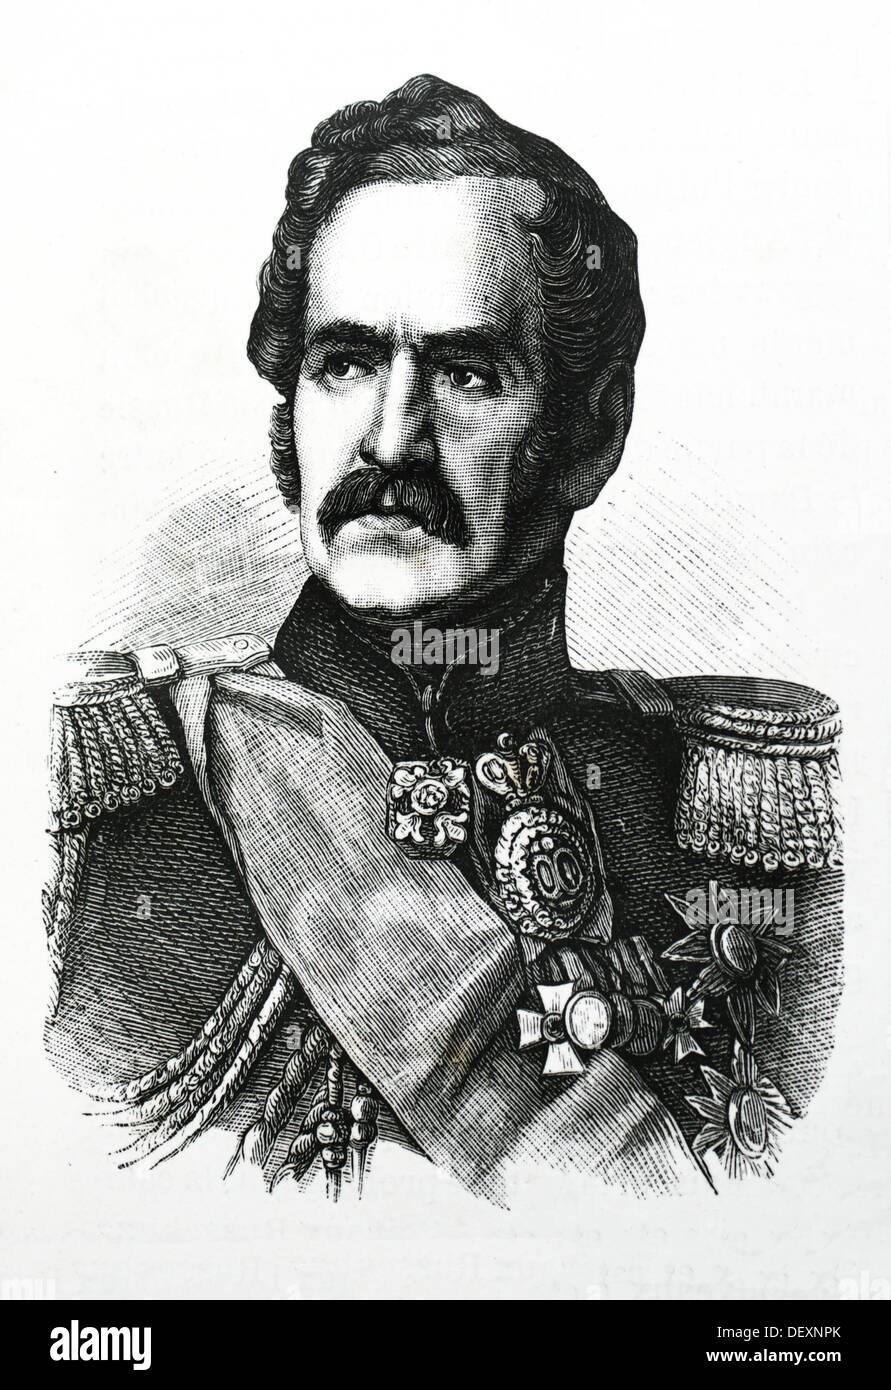 Vladimir Nikolaevich Lvov - Wikipedia